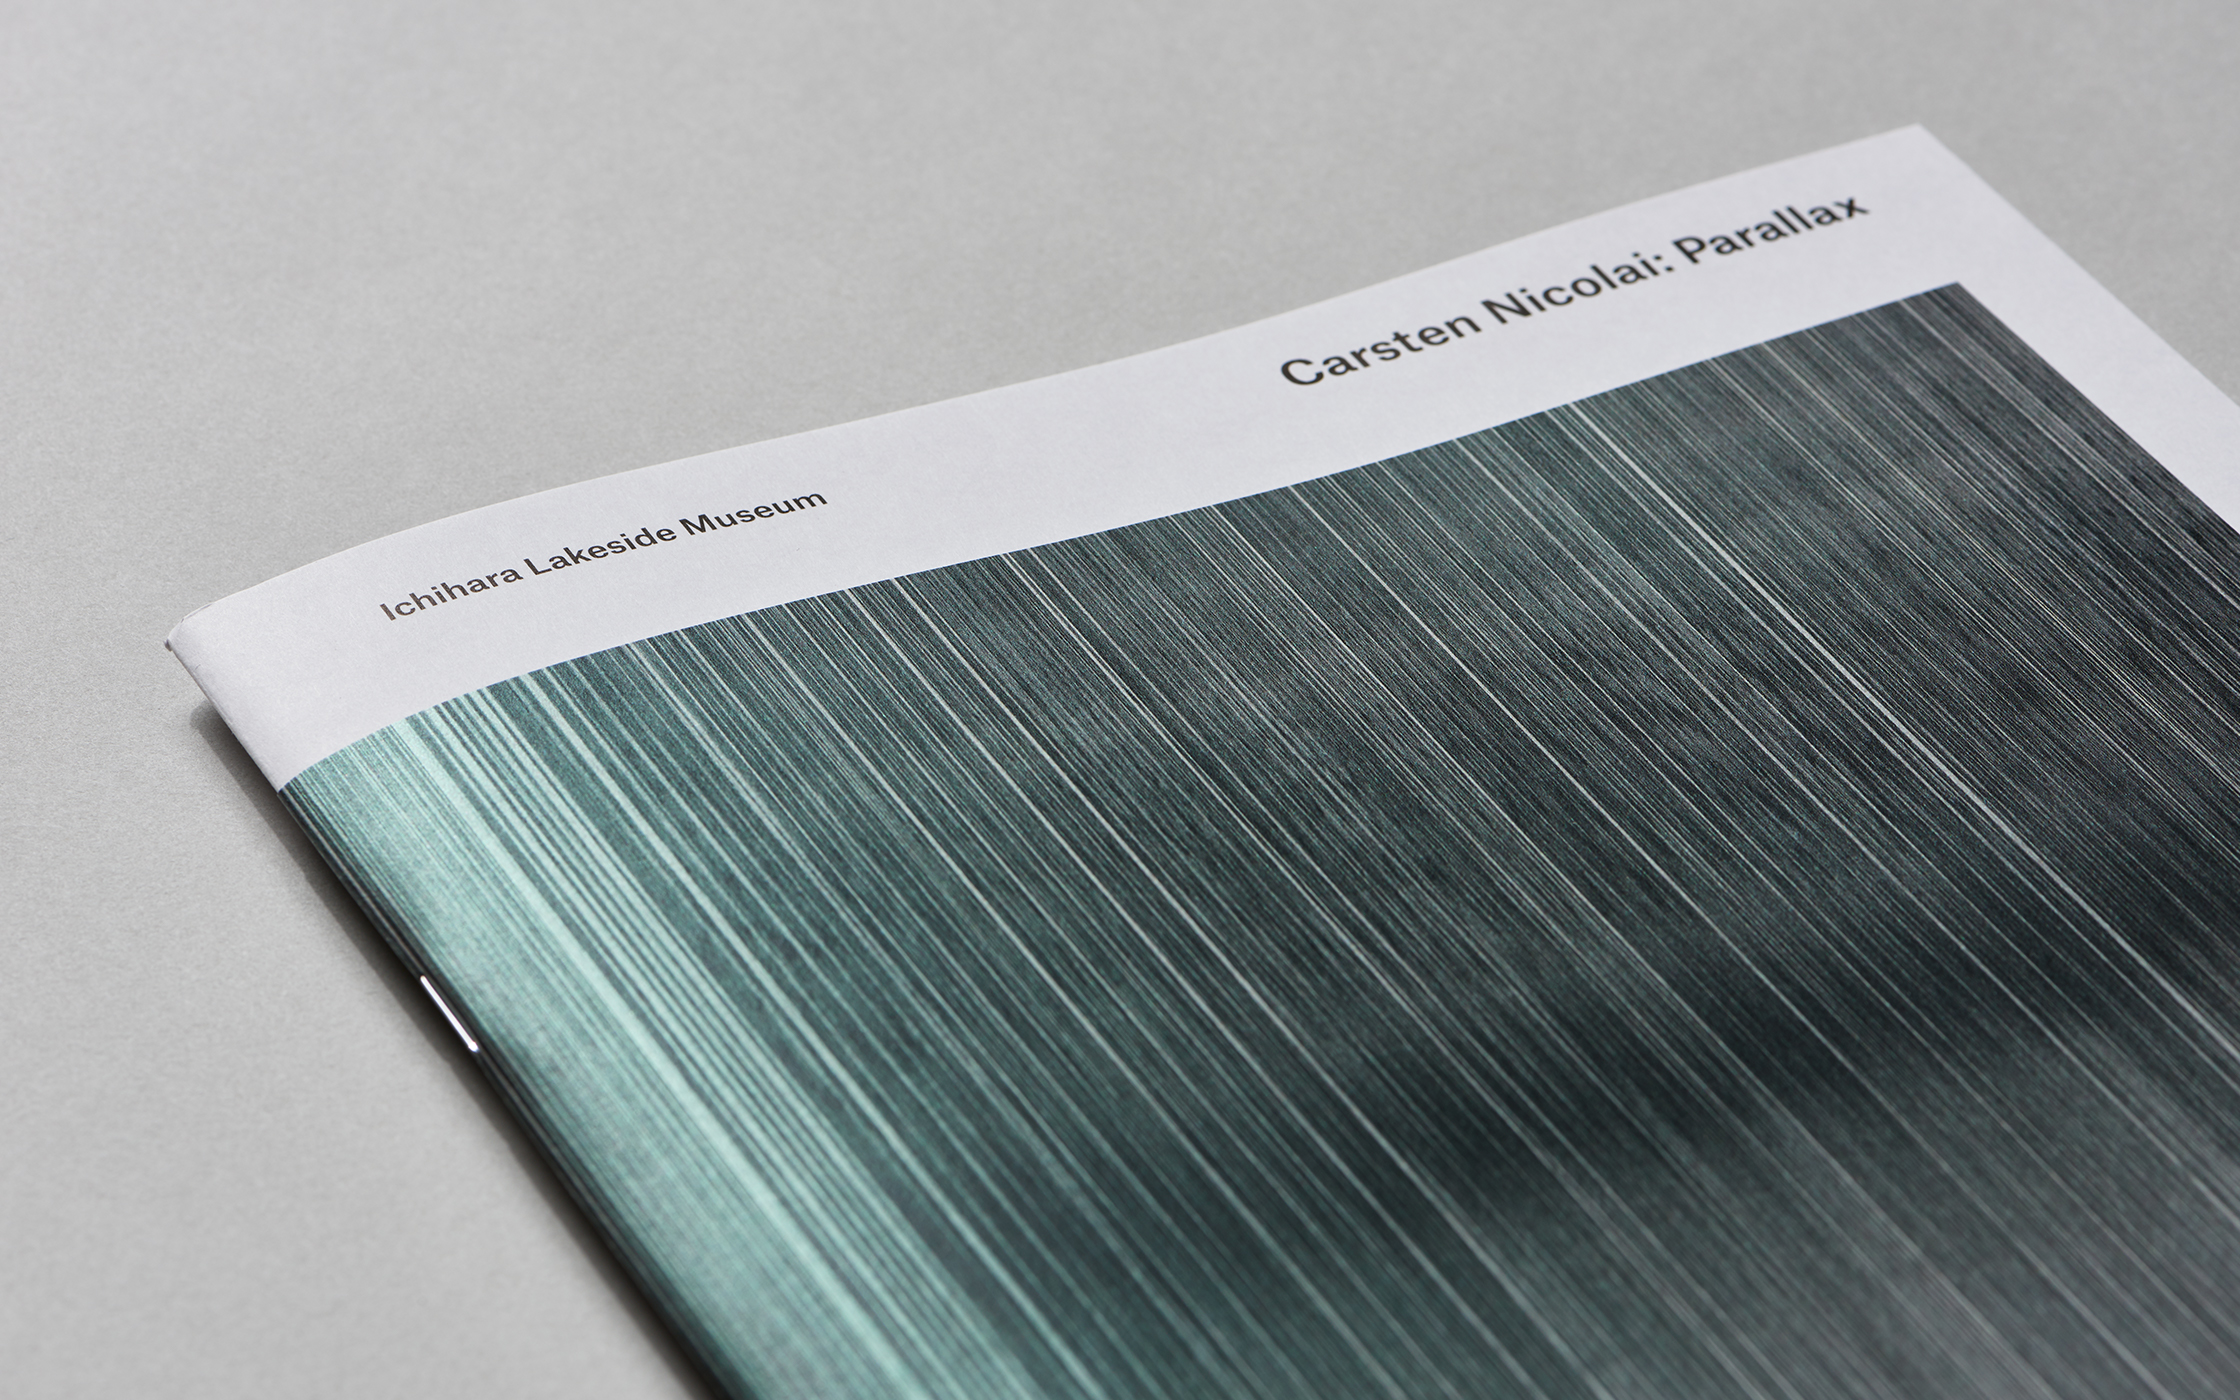 “Carsten Nicolai: Parallax” Exhibition Catalog